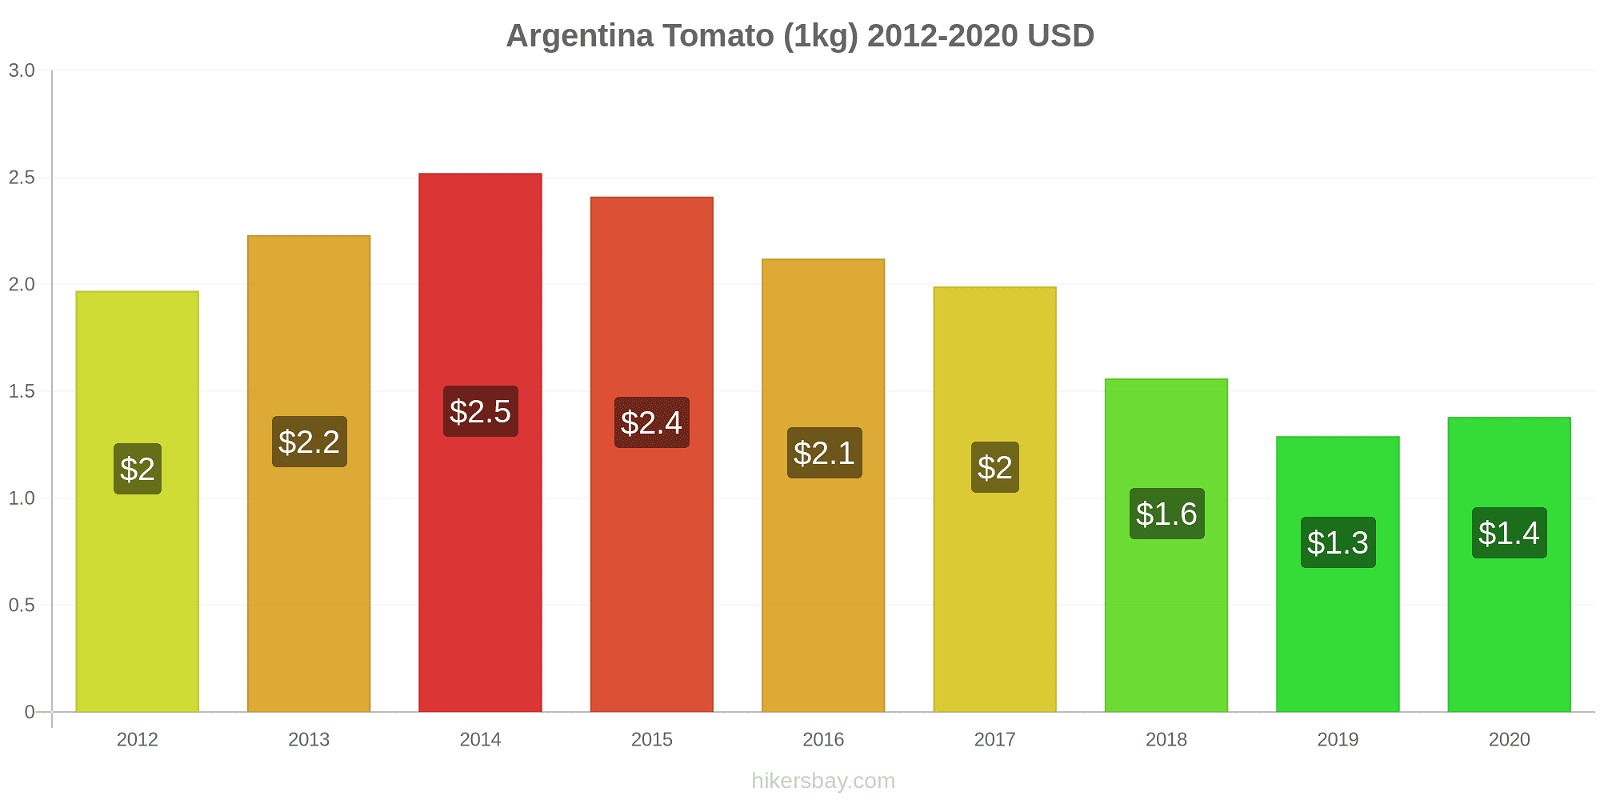 Argentina price changes Tomato (1kg) hikersbay.com